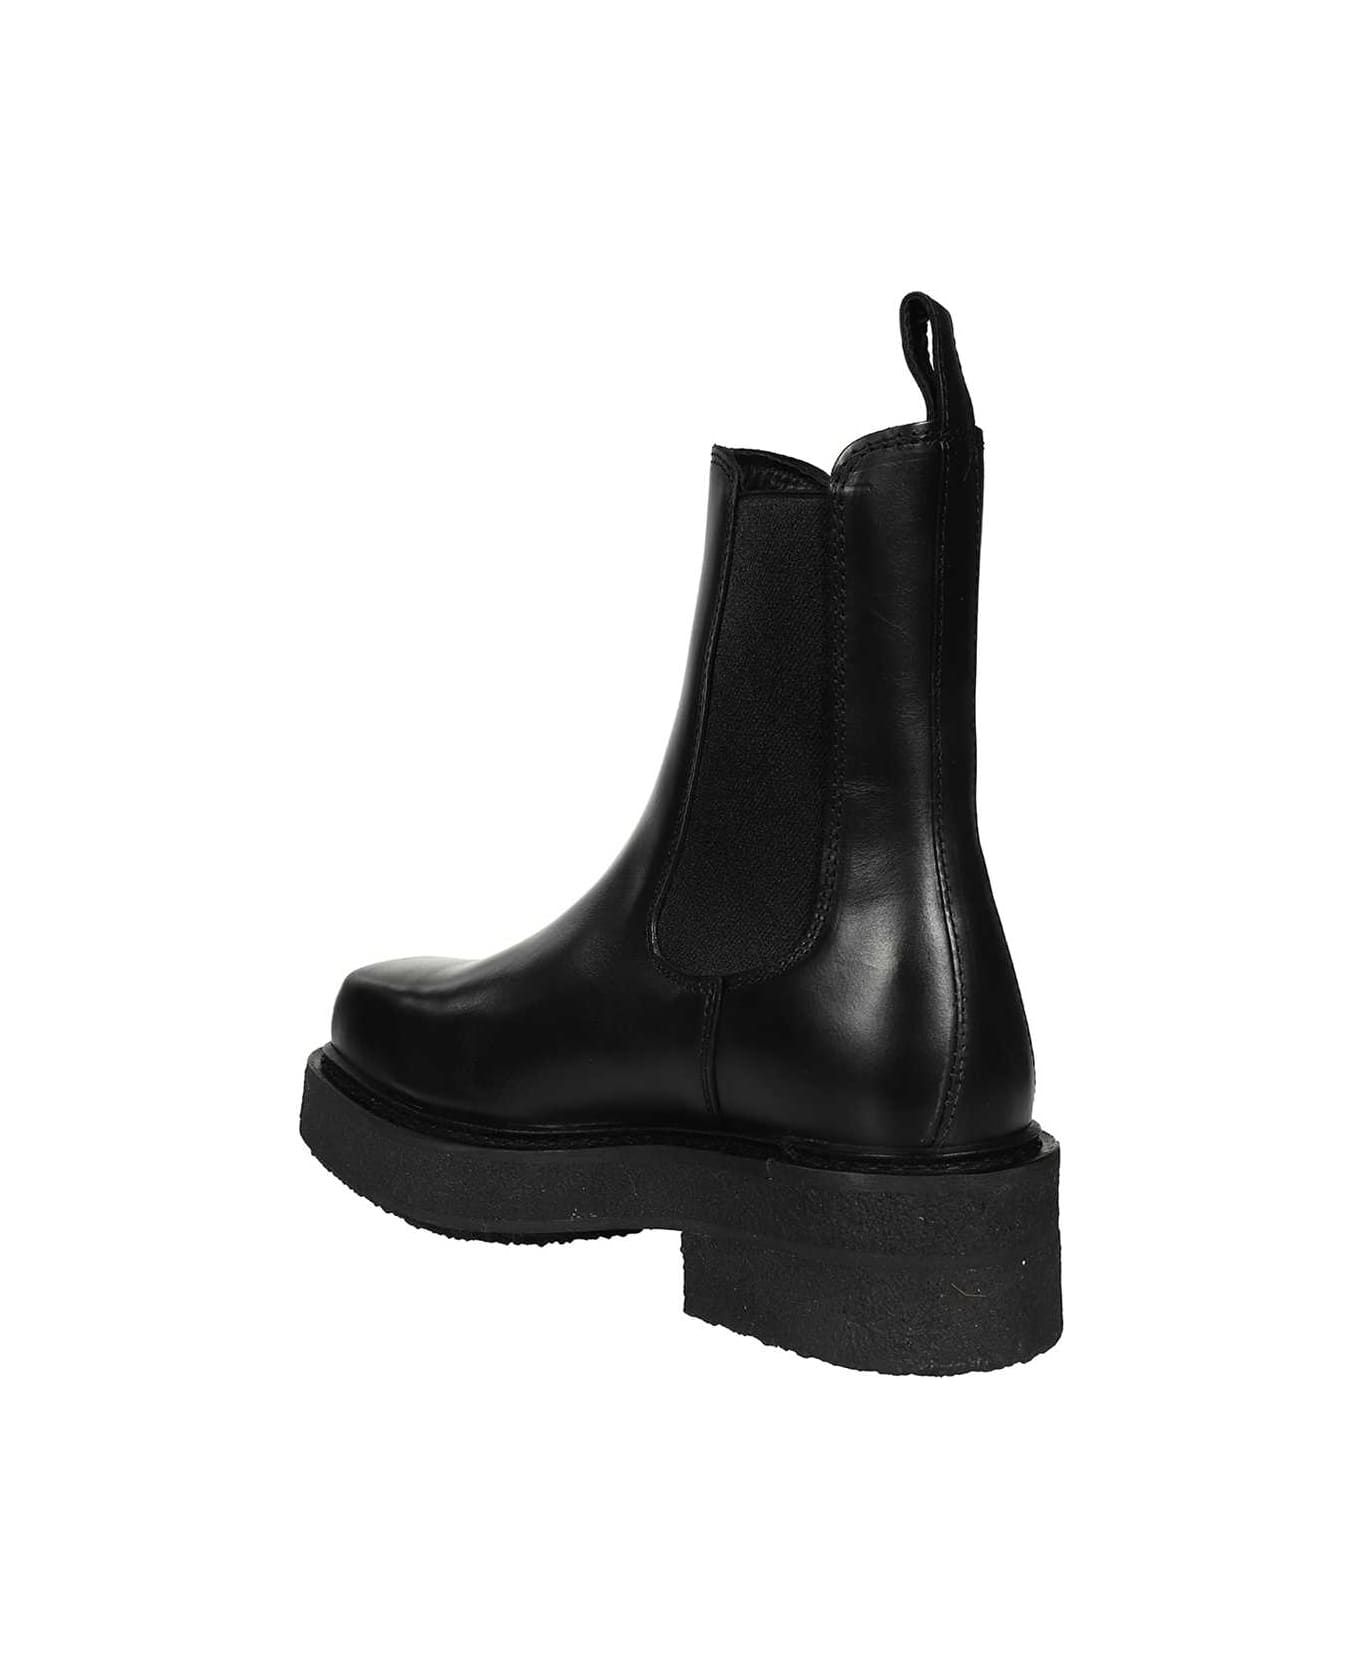 Eytys Platform Boots - black ブーツ